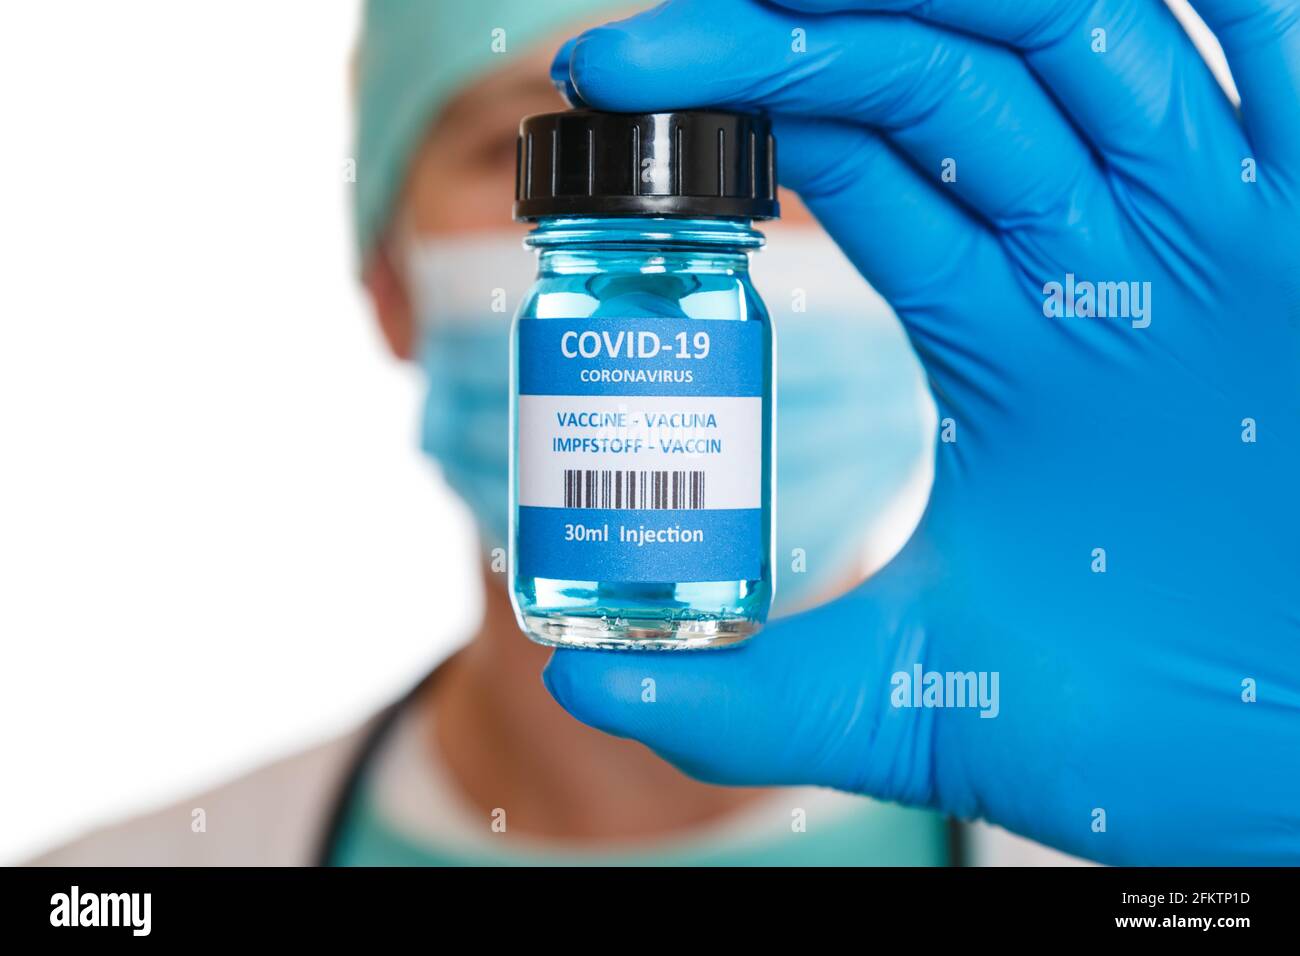 Coronavirus Vaccine bottle Corona Virus doctor COVID-19 Covid vaccines isolated on a white background. Stock Photo